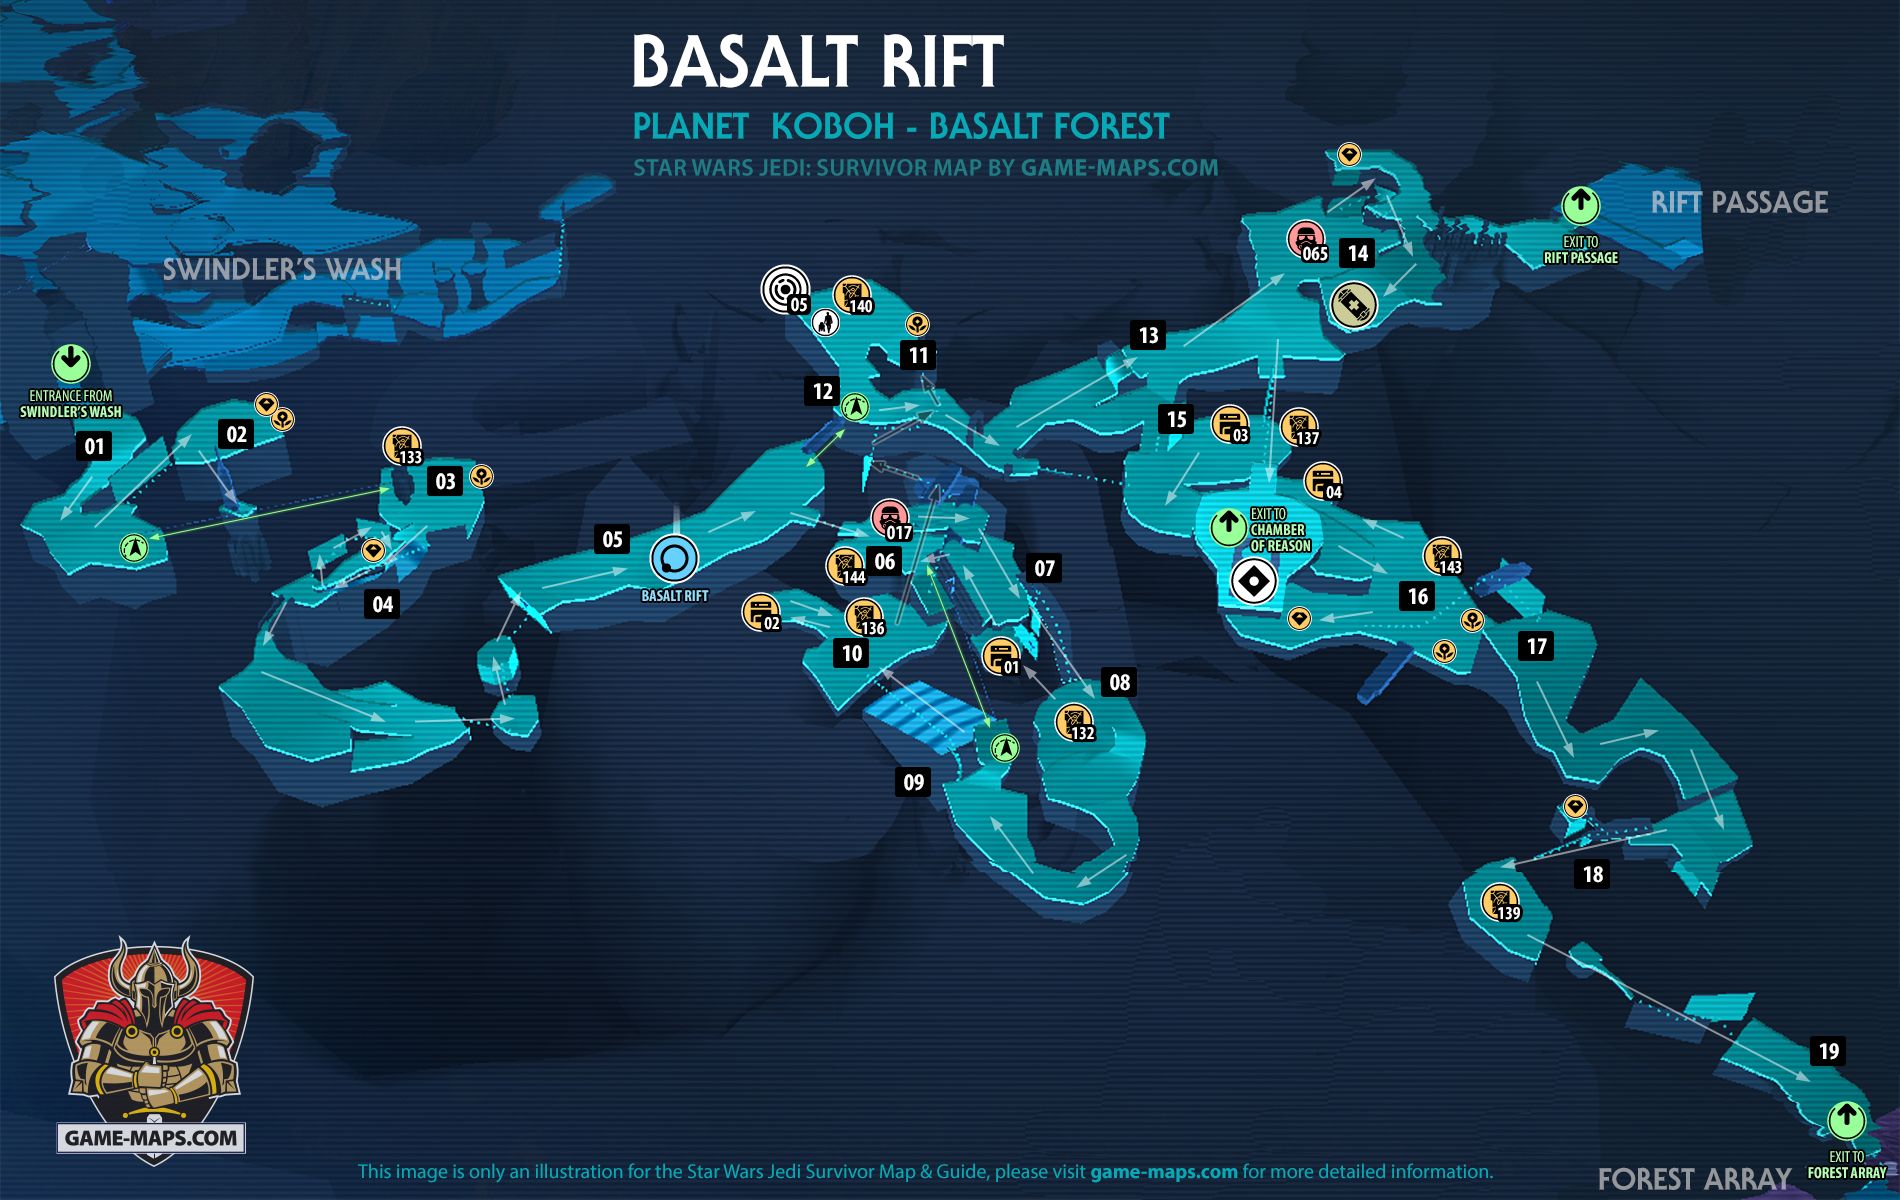 Basalt Rift Map Koboh Planet for Star Wars Jedi Survivor